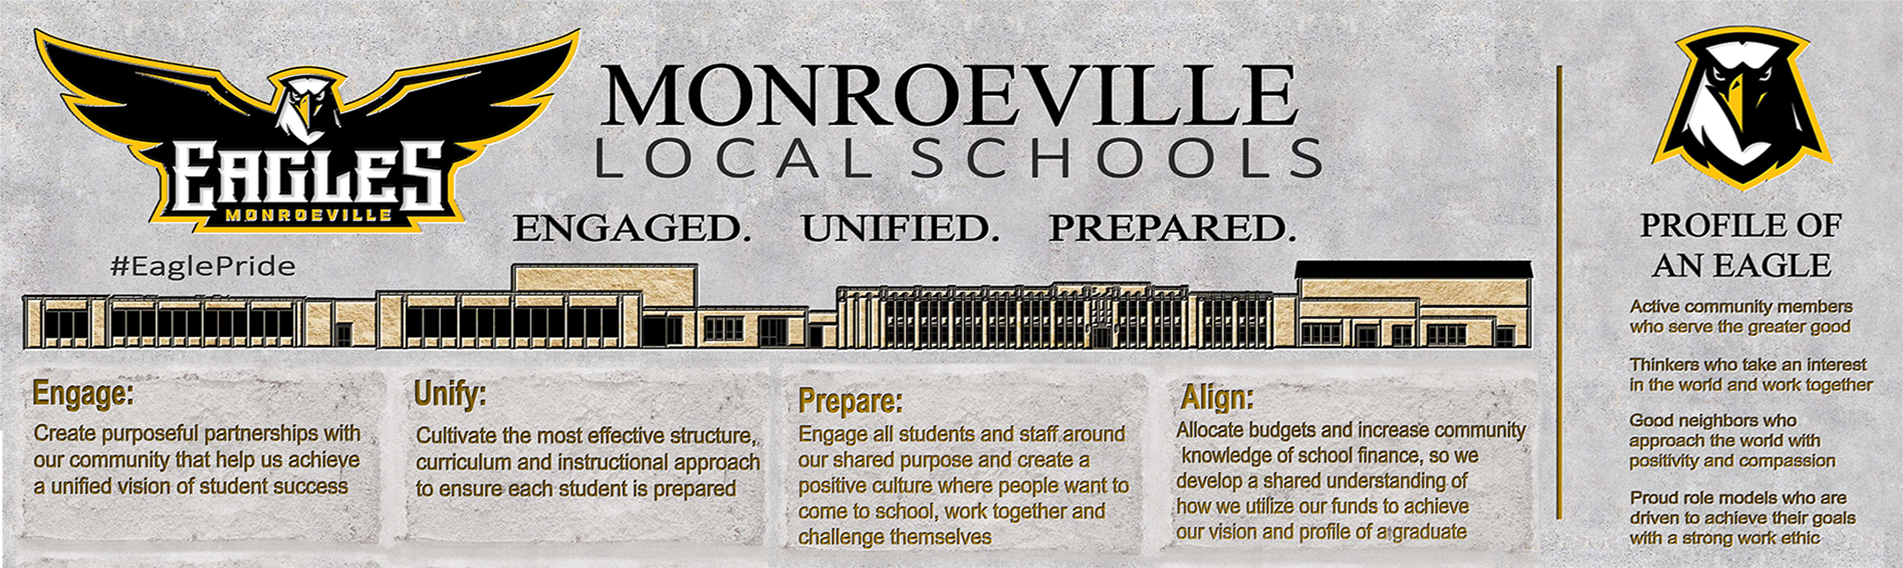 Monroeville Local Schools